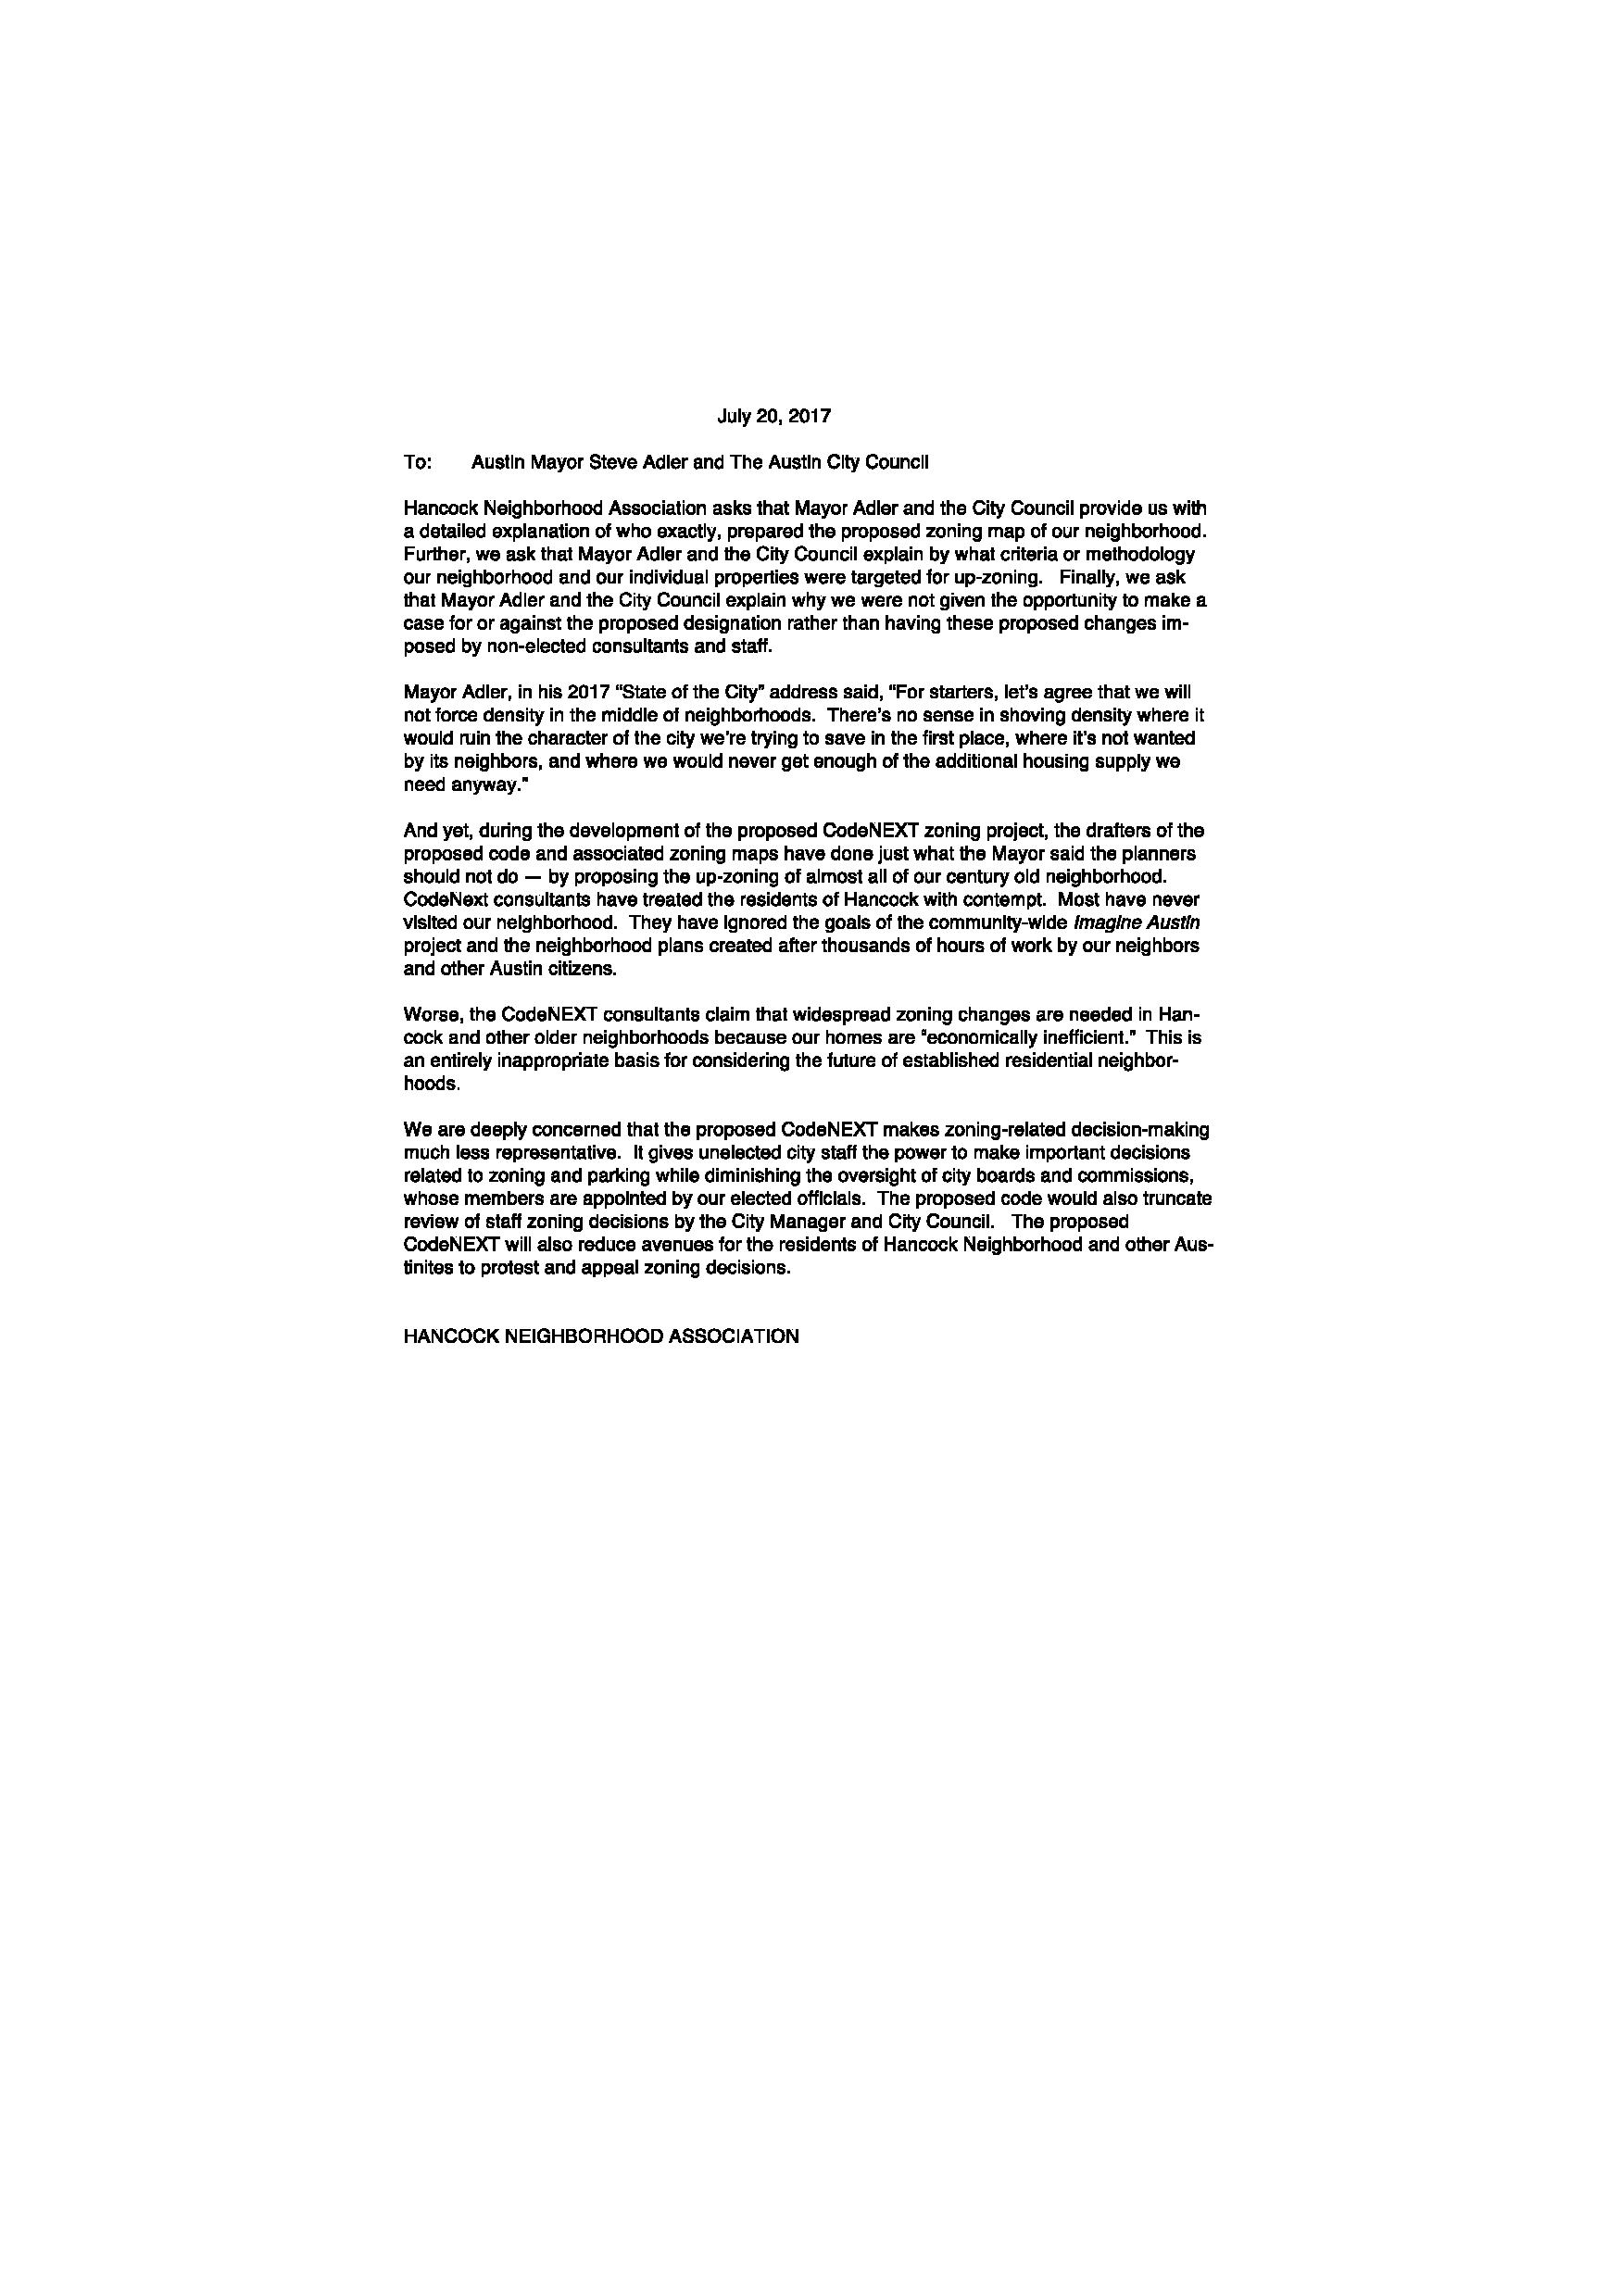 HNA letter. 7.19.17.pdf